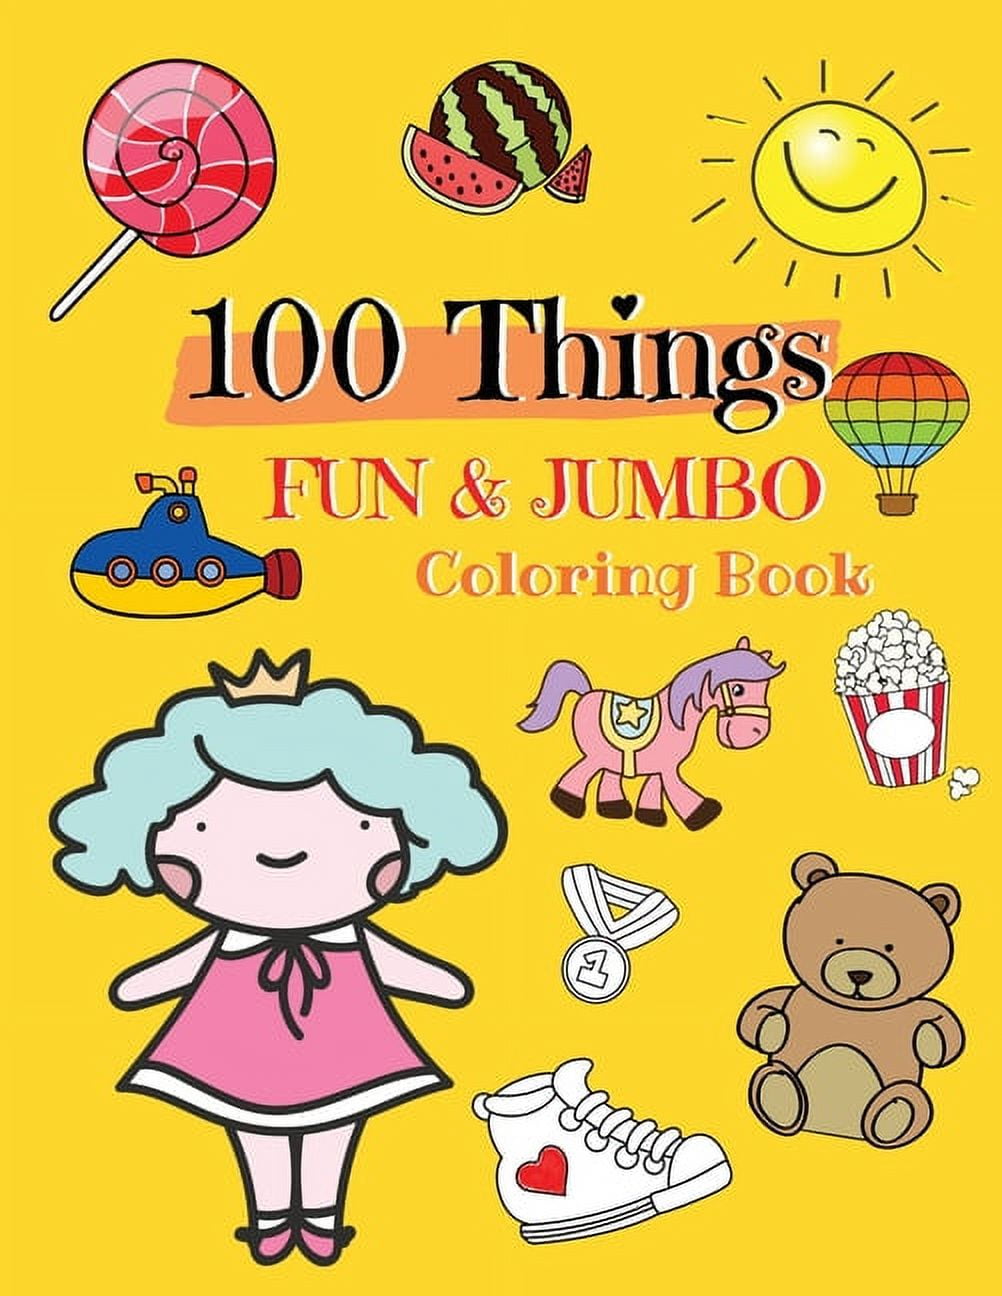 100 Things FUN & JUMBO Coloring Book: Easy and Big Coloring Books